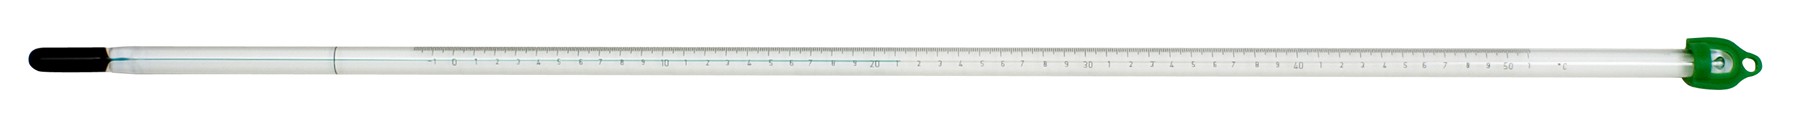 H-B DURAC Plus Precision Liquid-In-Glass Thermometer; -1 to 201C, 76mm Immersion, Organic Liquid Fill